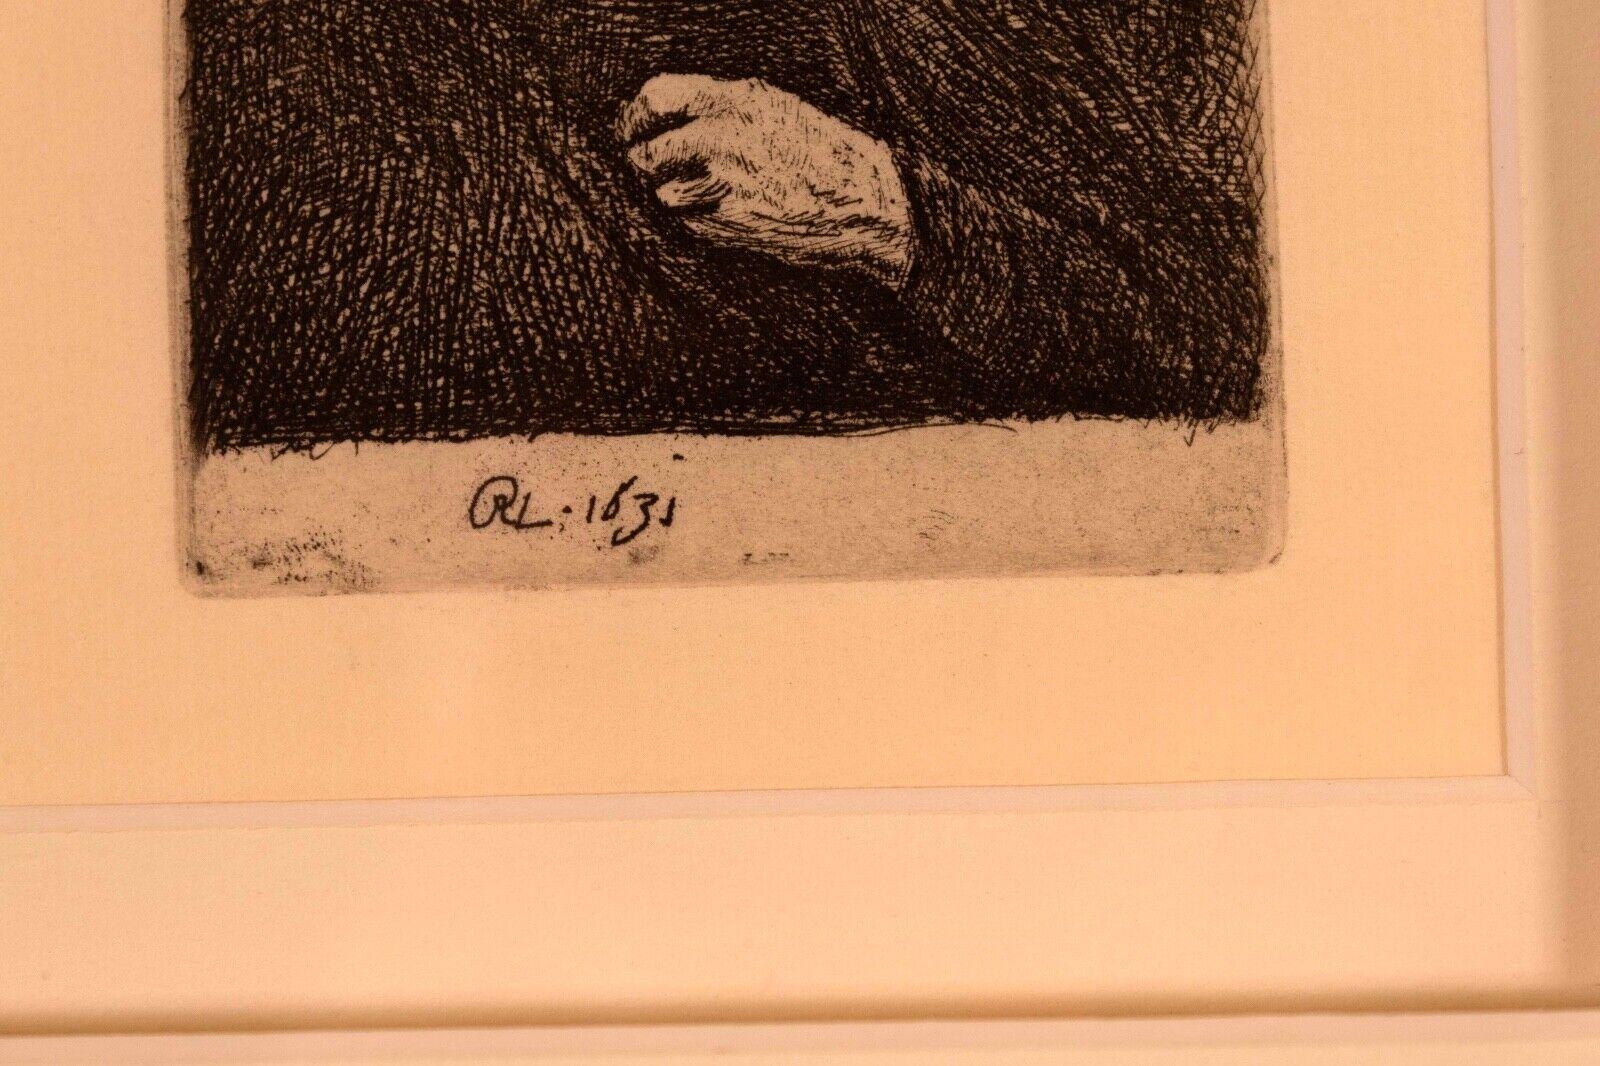 rembrandt's mother